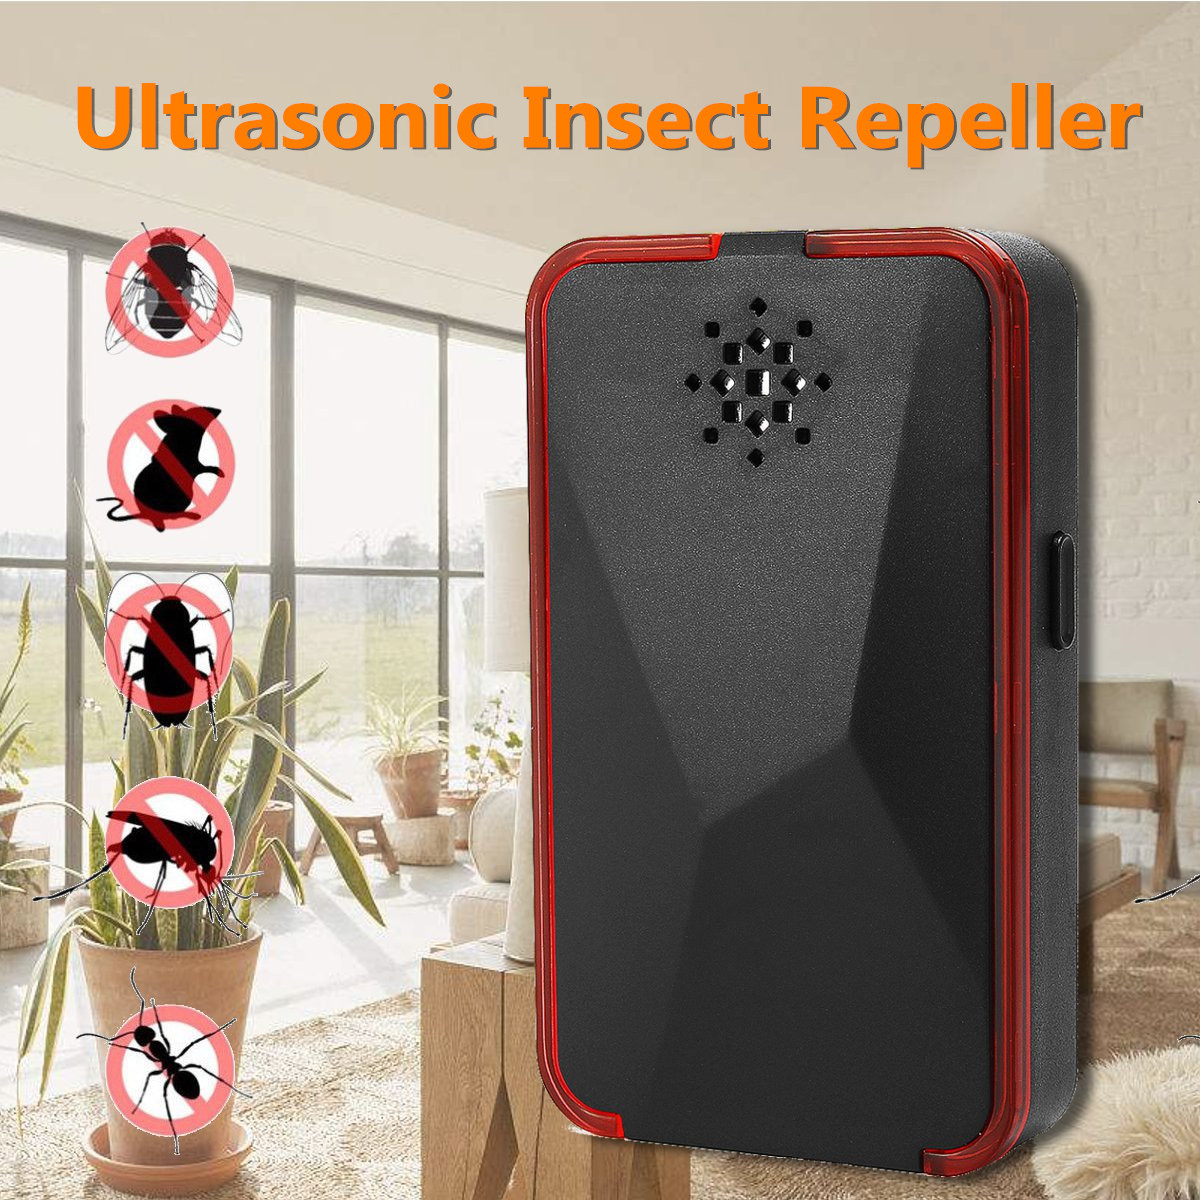 Ultrasonic-Pest-Repeller-Electronic-Ultrasonic-Pest-Repeller-Plug-in-Mosquito-Repellent-Pest-Control-1352321-2